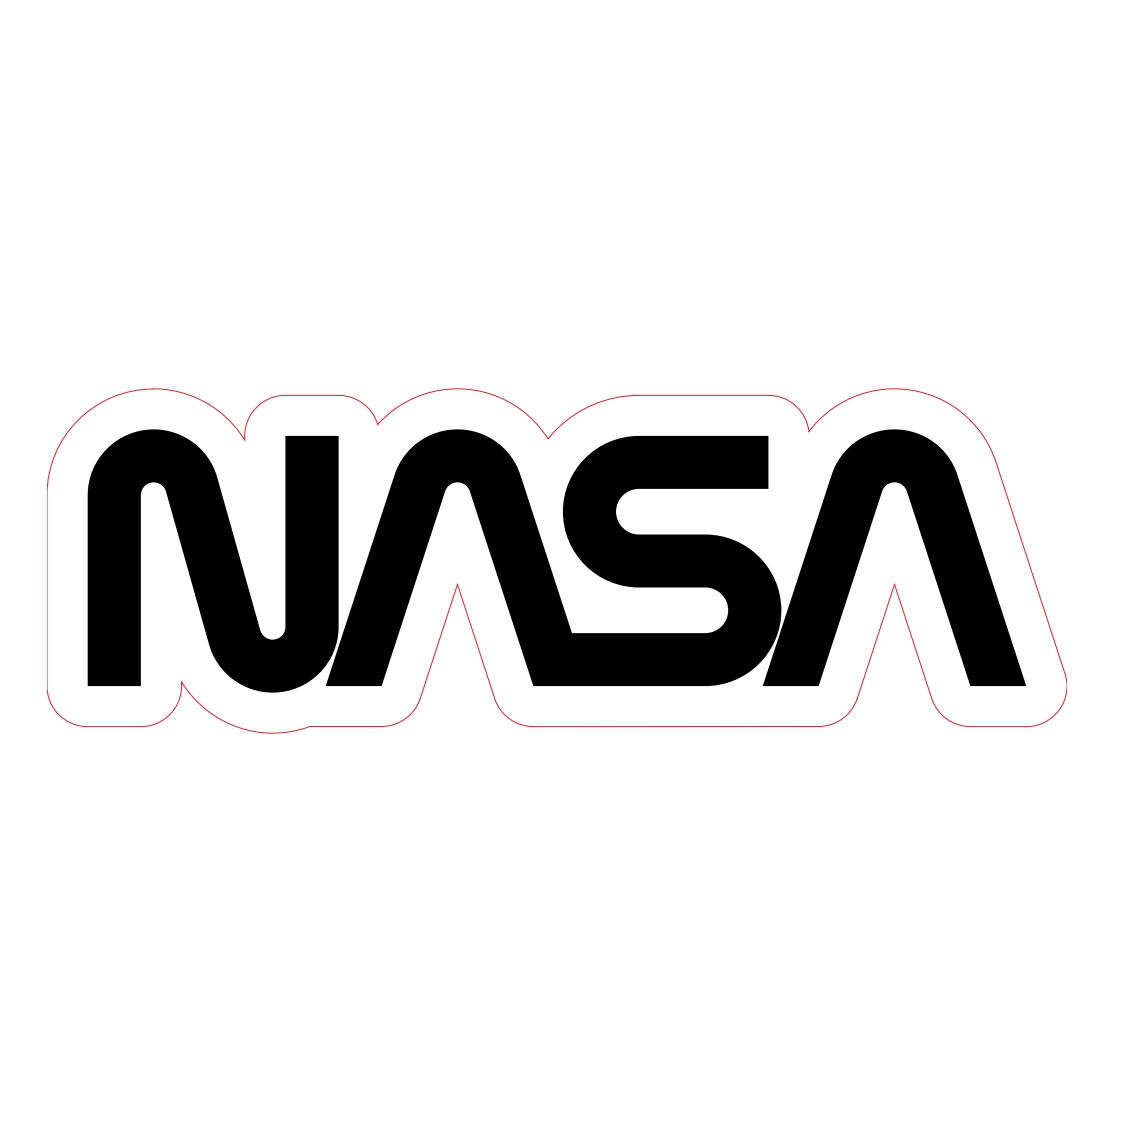 samolepka NASA worm logo 9x3cm černá